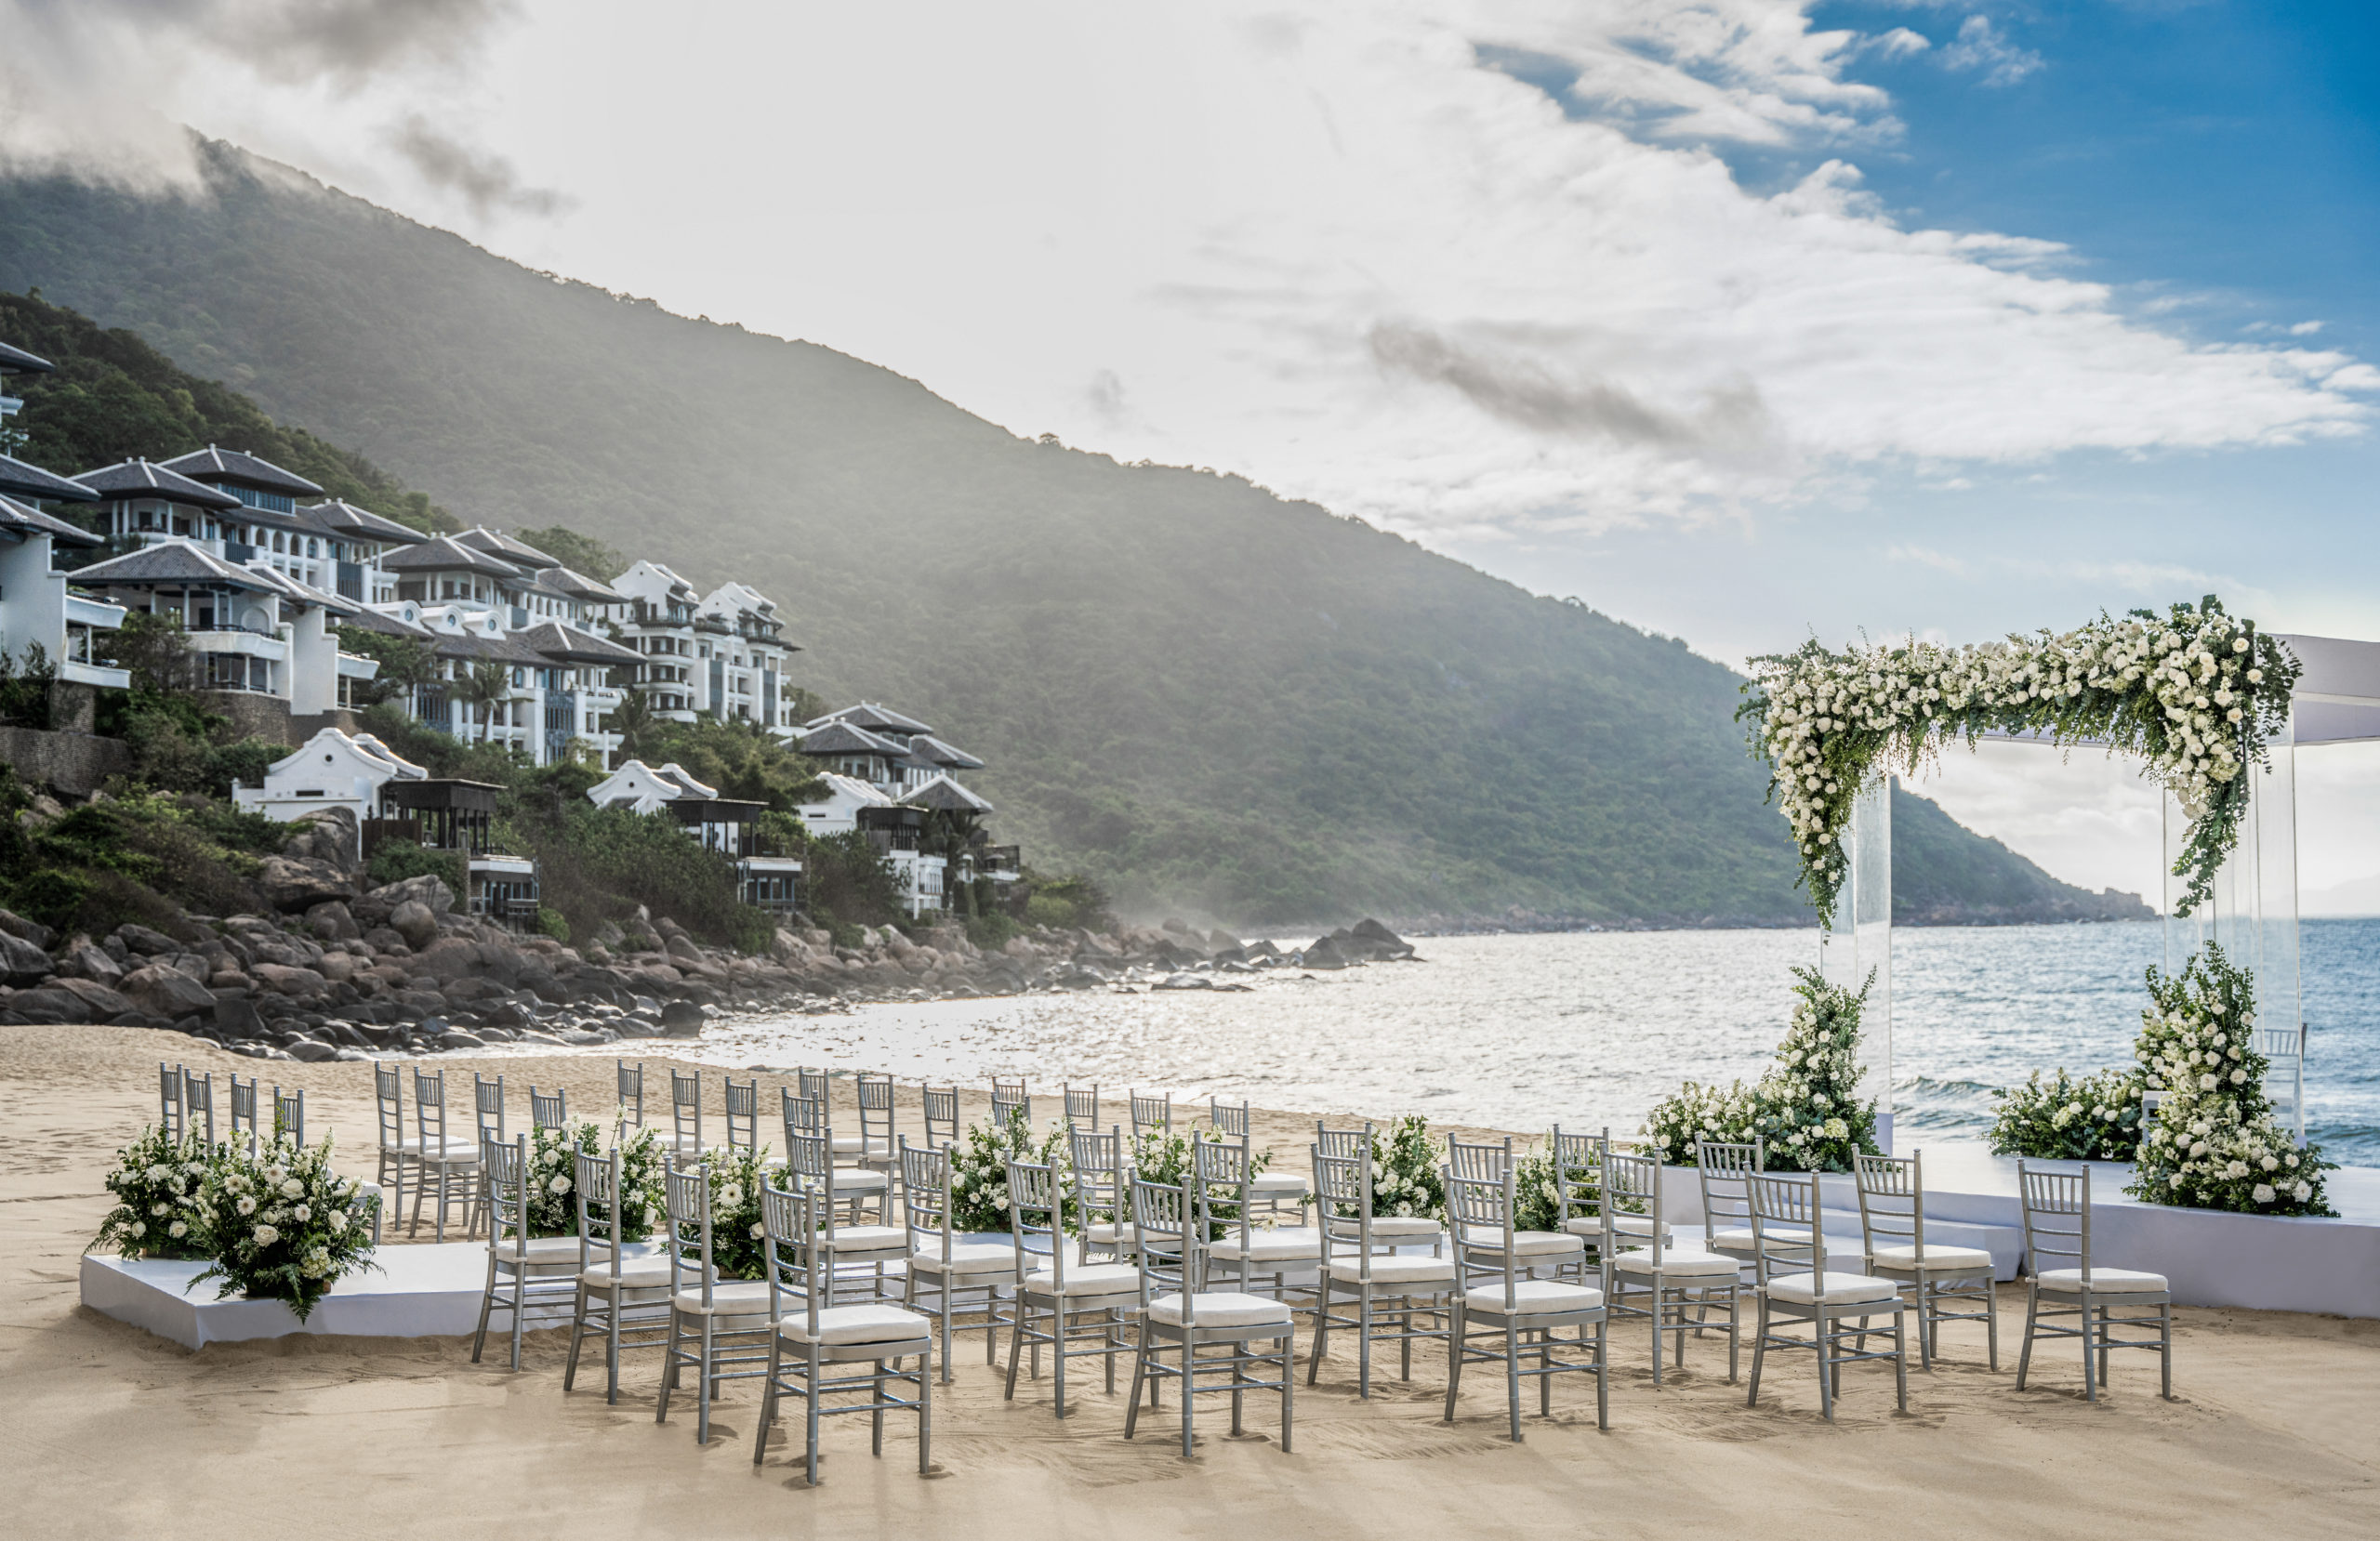 Weddings | Your Bespoke Fairytale | InterContinental Danang